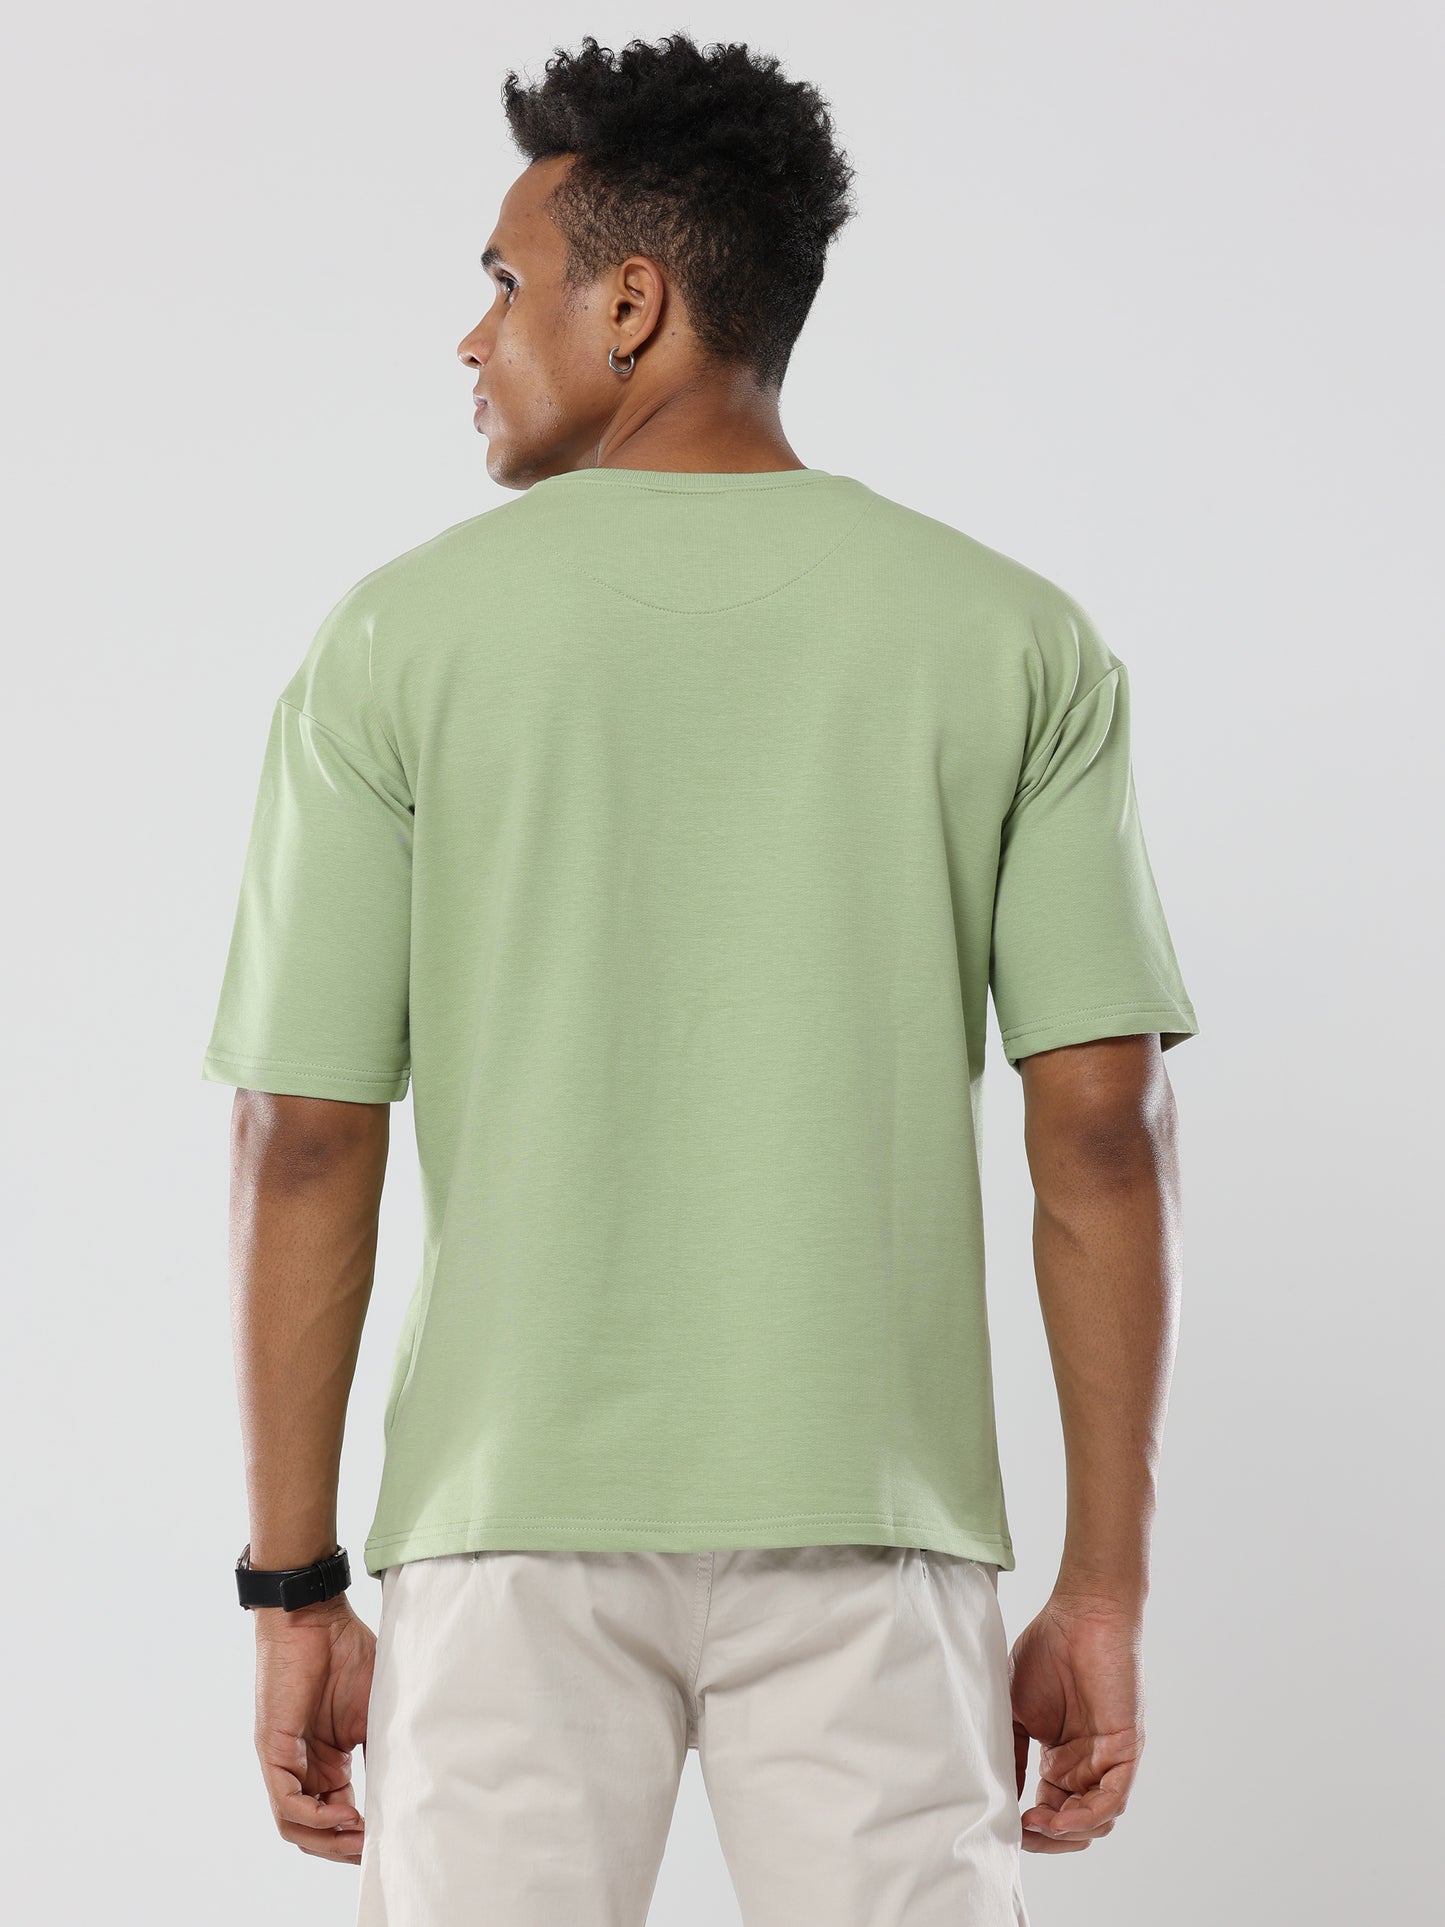 Pista Green Dancester Print very premium Quality Oversized T-Shirt